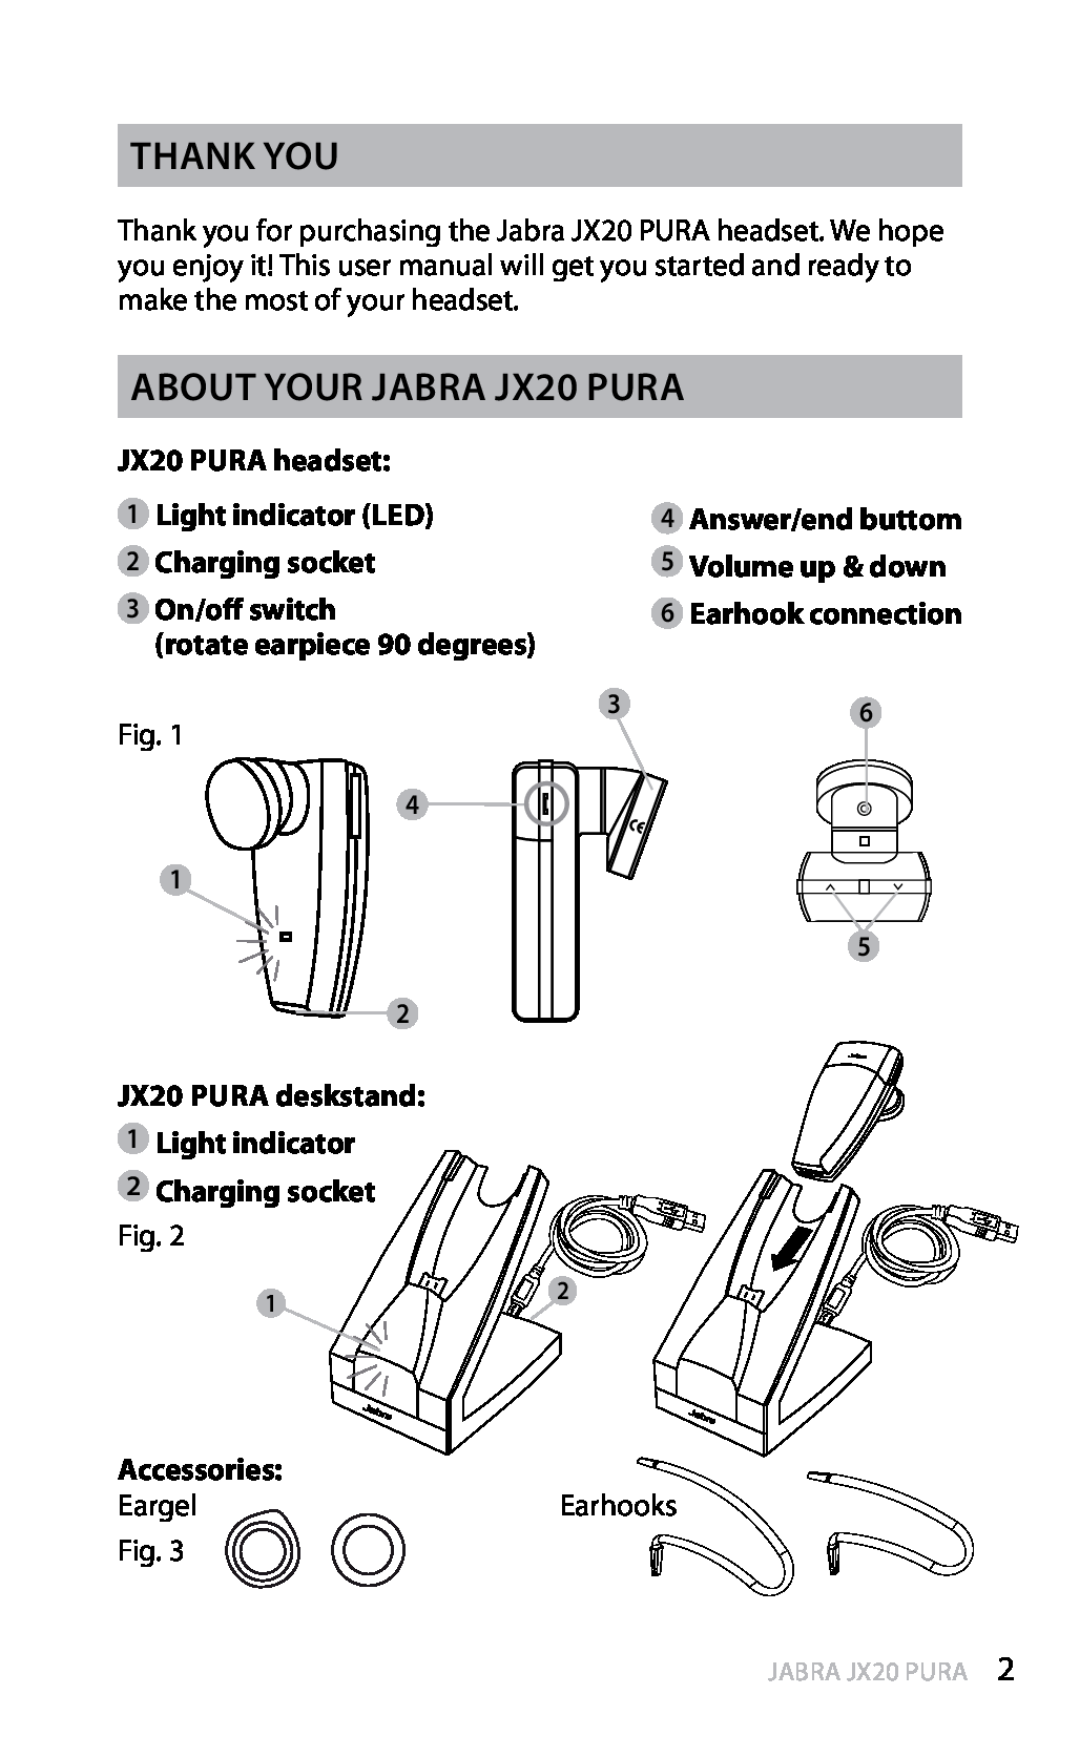 Jabra Thank you, About your Jabra JX20 PURA, JX20 PURA headset, Light indicator LED, Charging socket, On/off switch 